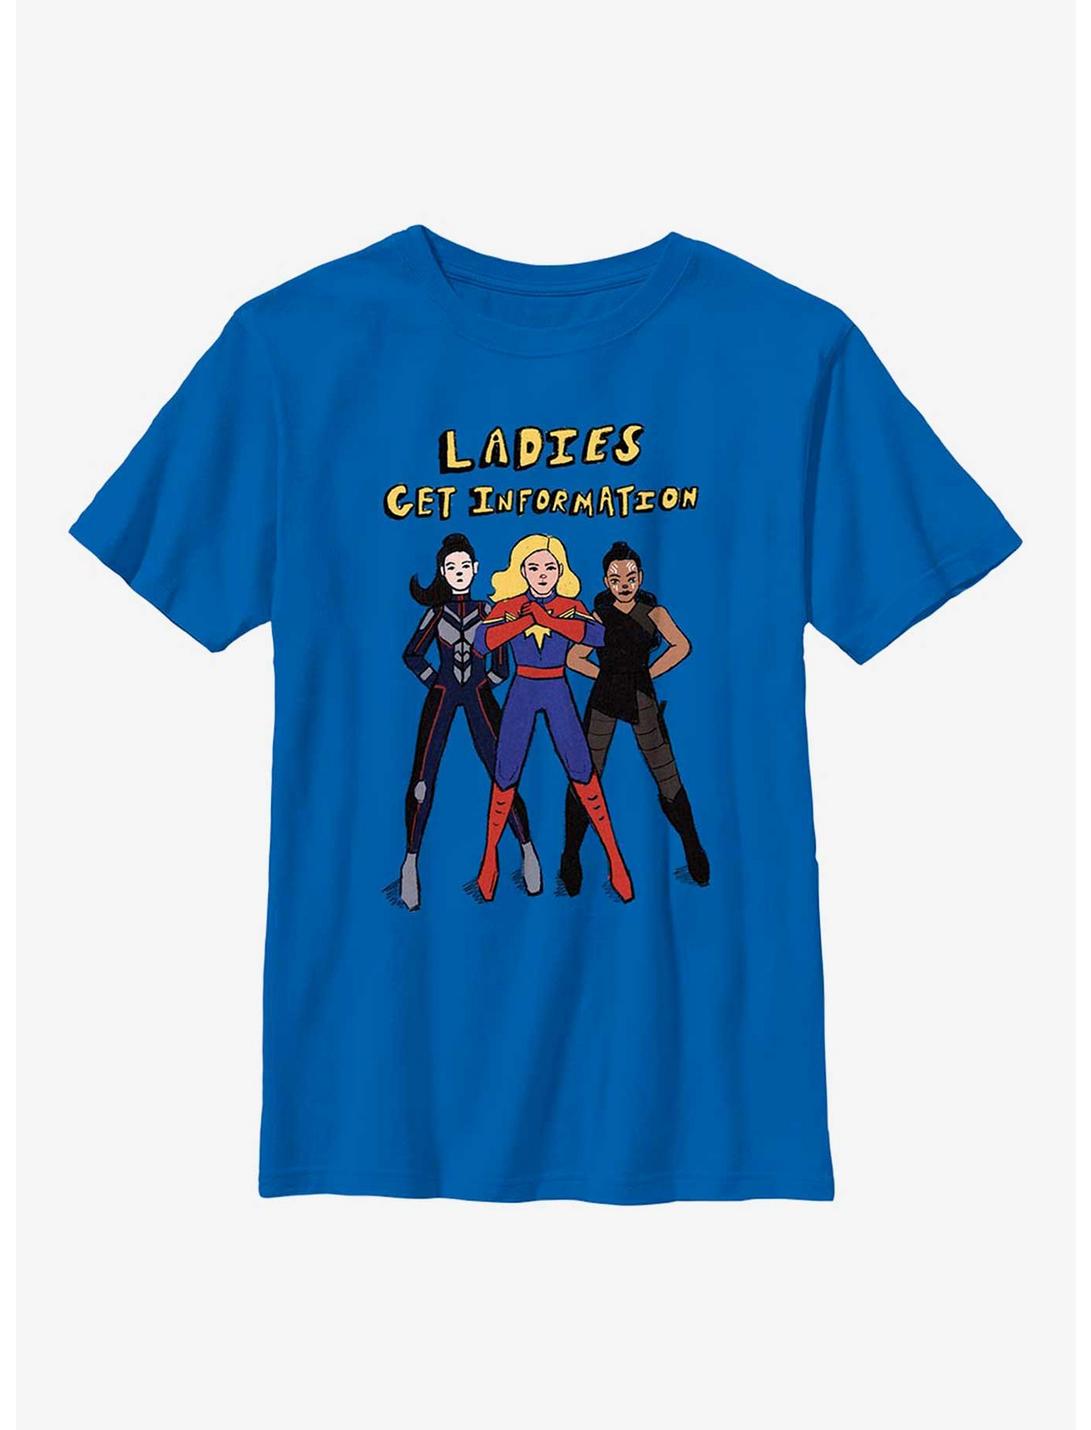 Marvel Ms. Marvel Ladies Get Info Youth T-Shirt, ROYAL, hi-res